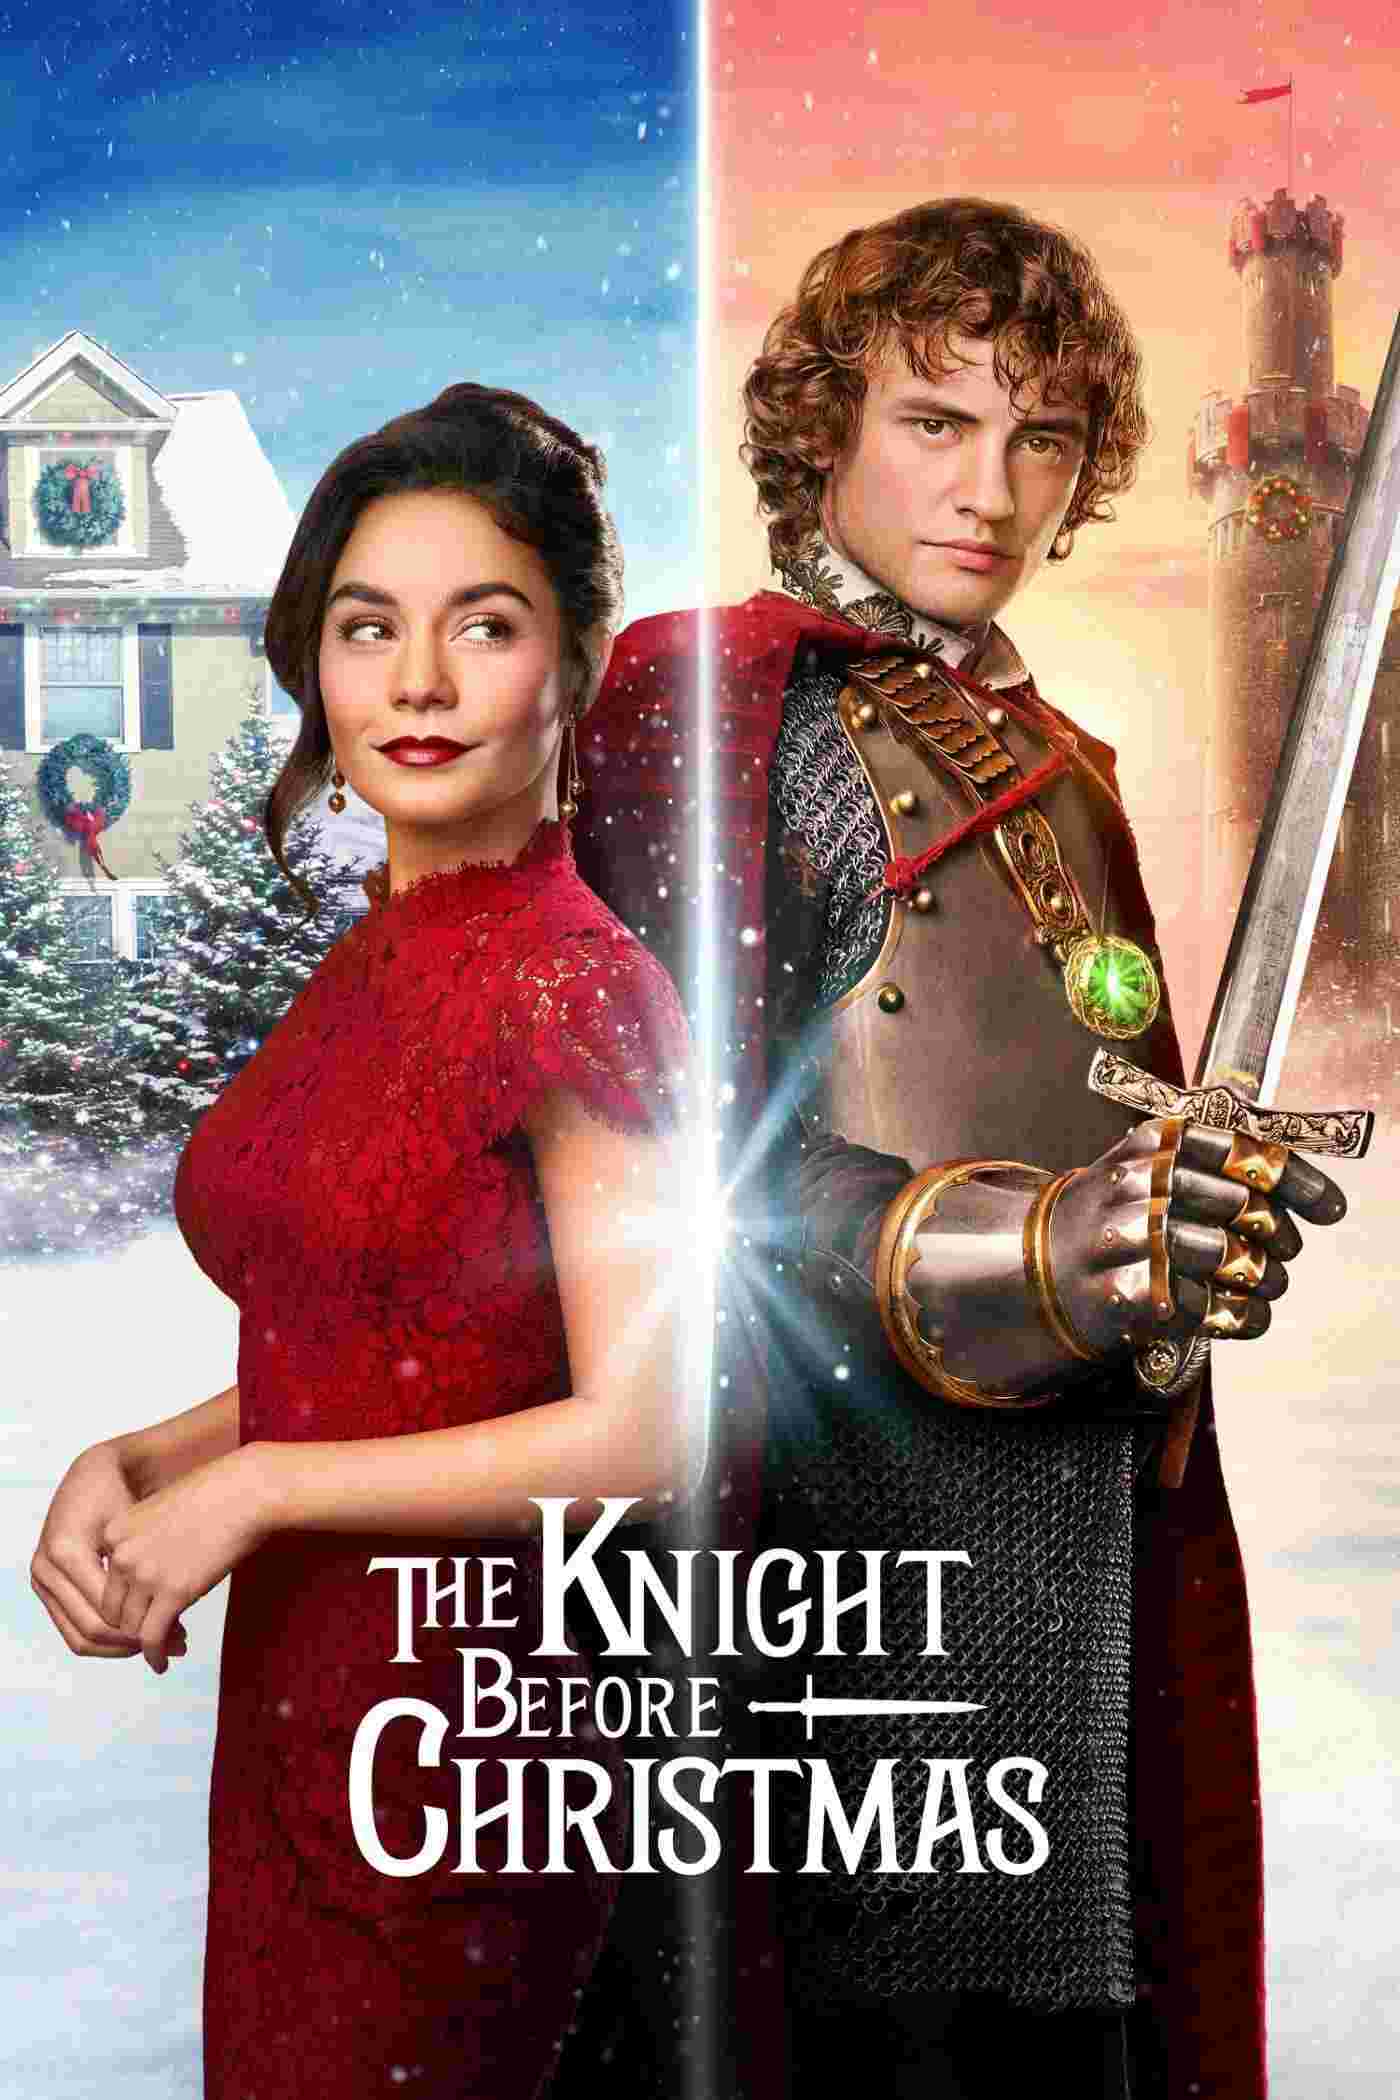 The Knight Before Christmas (2019) Vanessa Hudgens